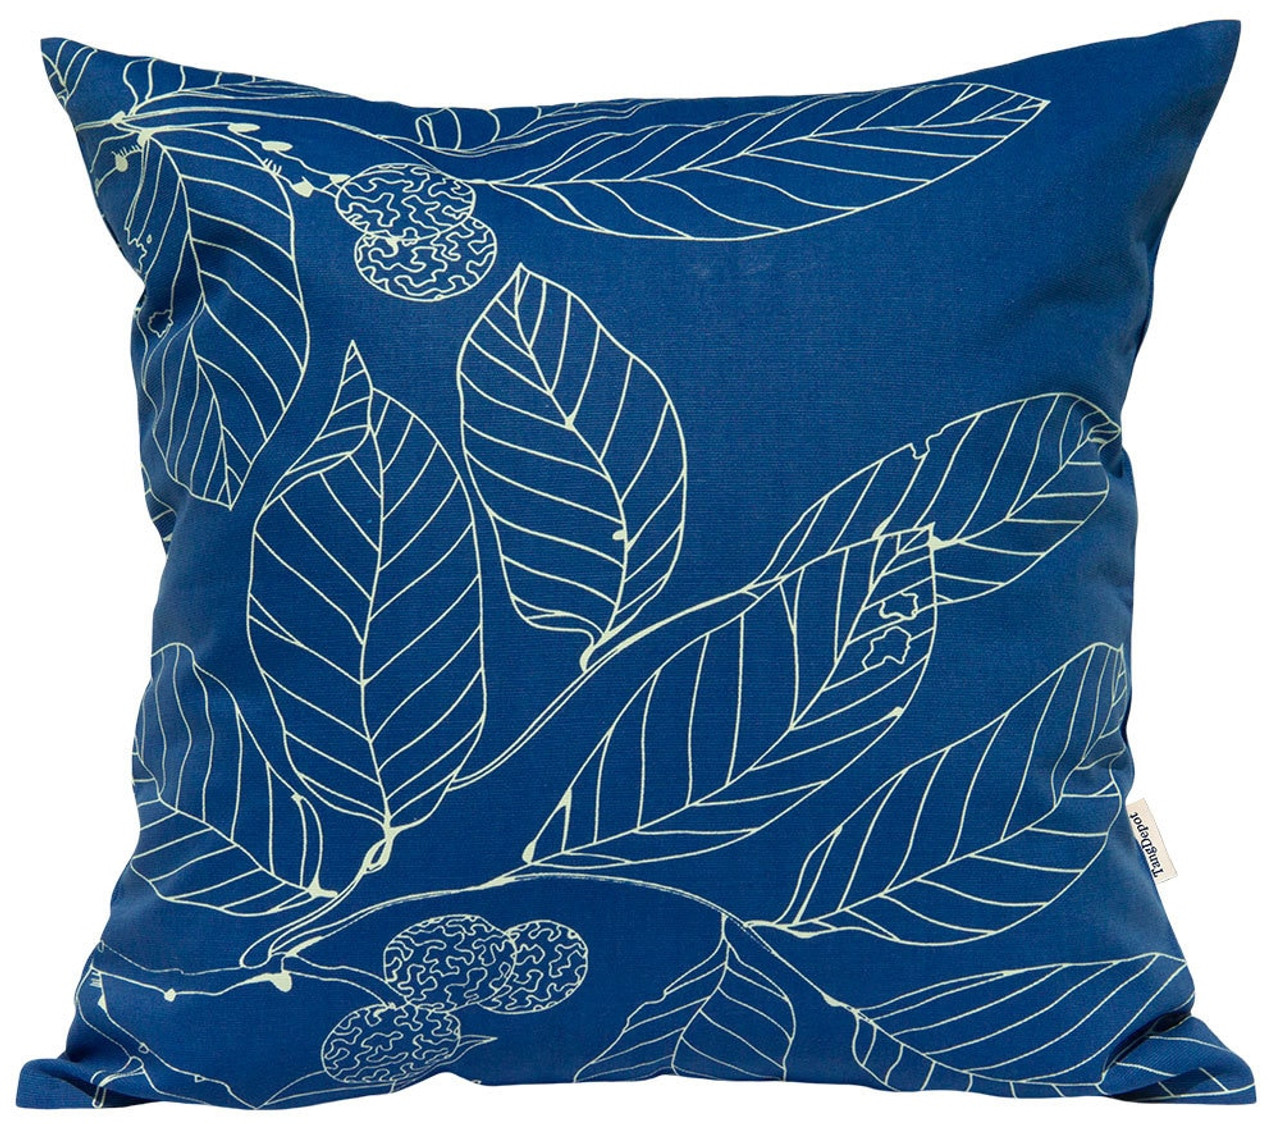 Details about   S4Sassy Sofa Pillow Sham Leaf Print 2 Pcs Cotton Poplin Home Decor Cushion Cover 